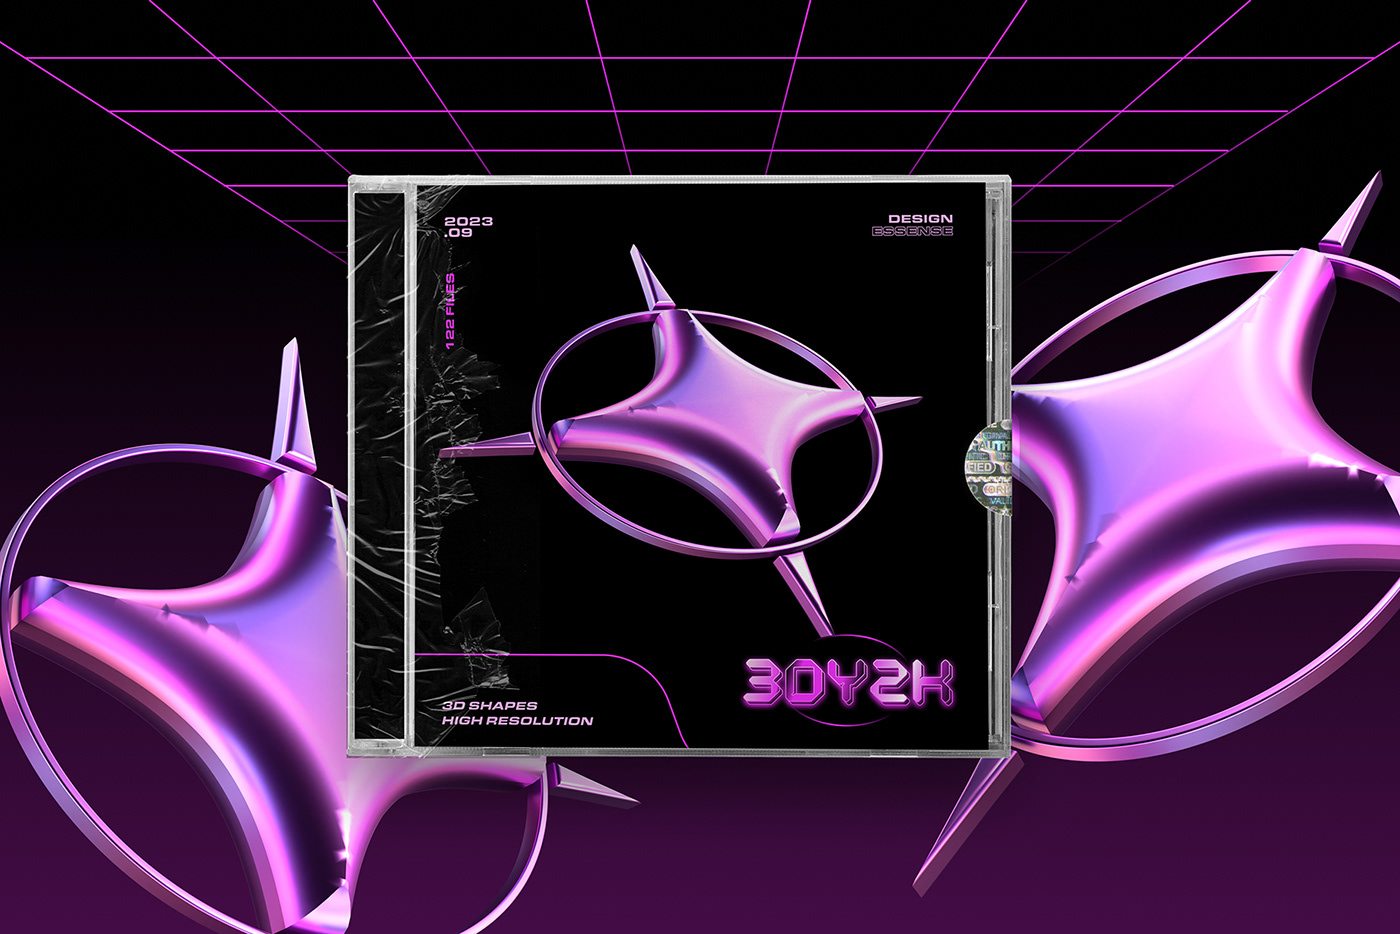 Y2K chrome pink Cyberpunk futuristic assets resources download 3D 3D shapes